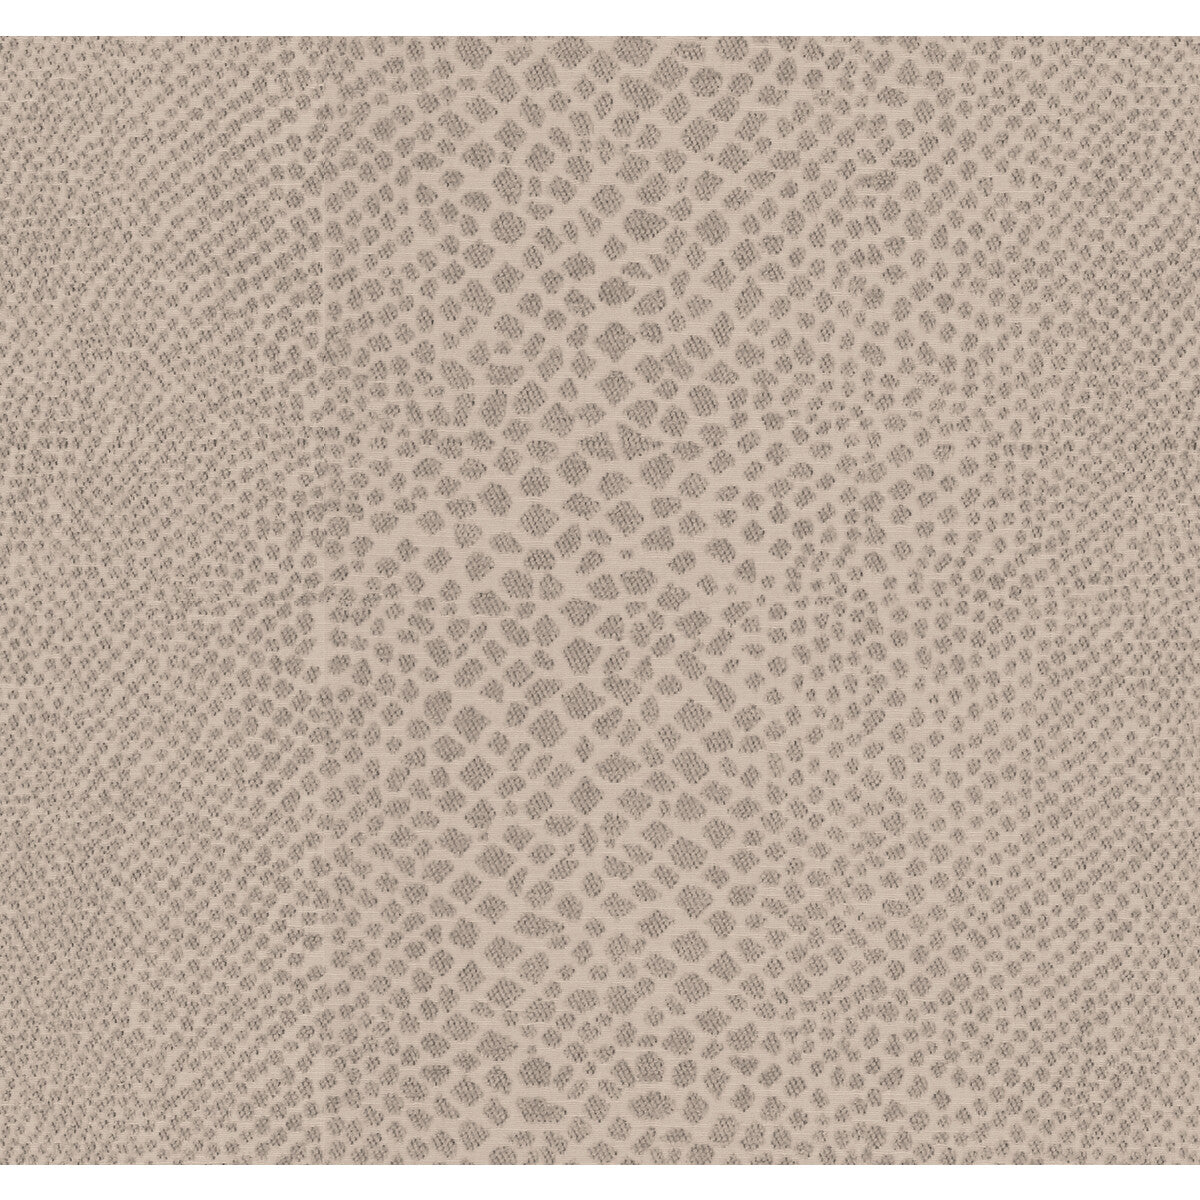 Kravet Smart fabric in 34321-1621 color - pattern 34321.1621.0 - by Kravet Smart